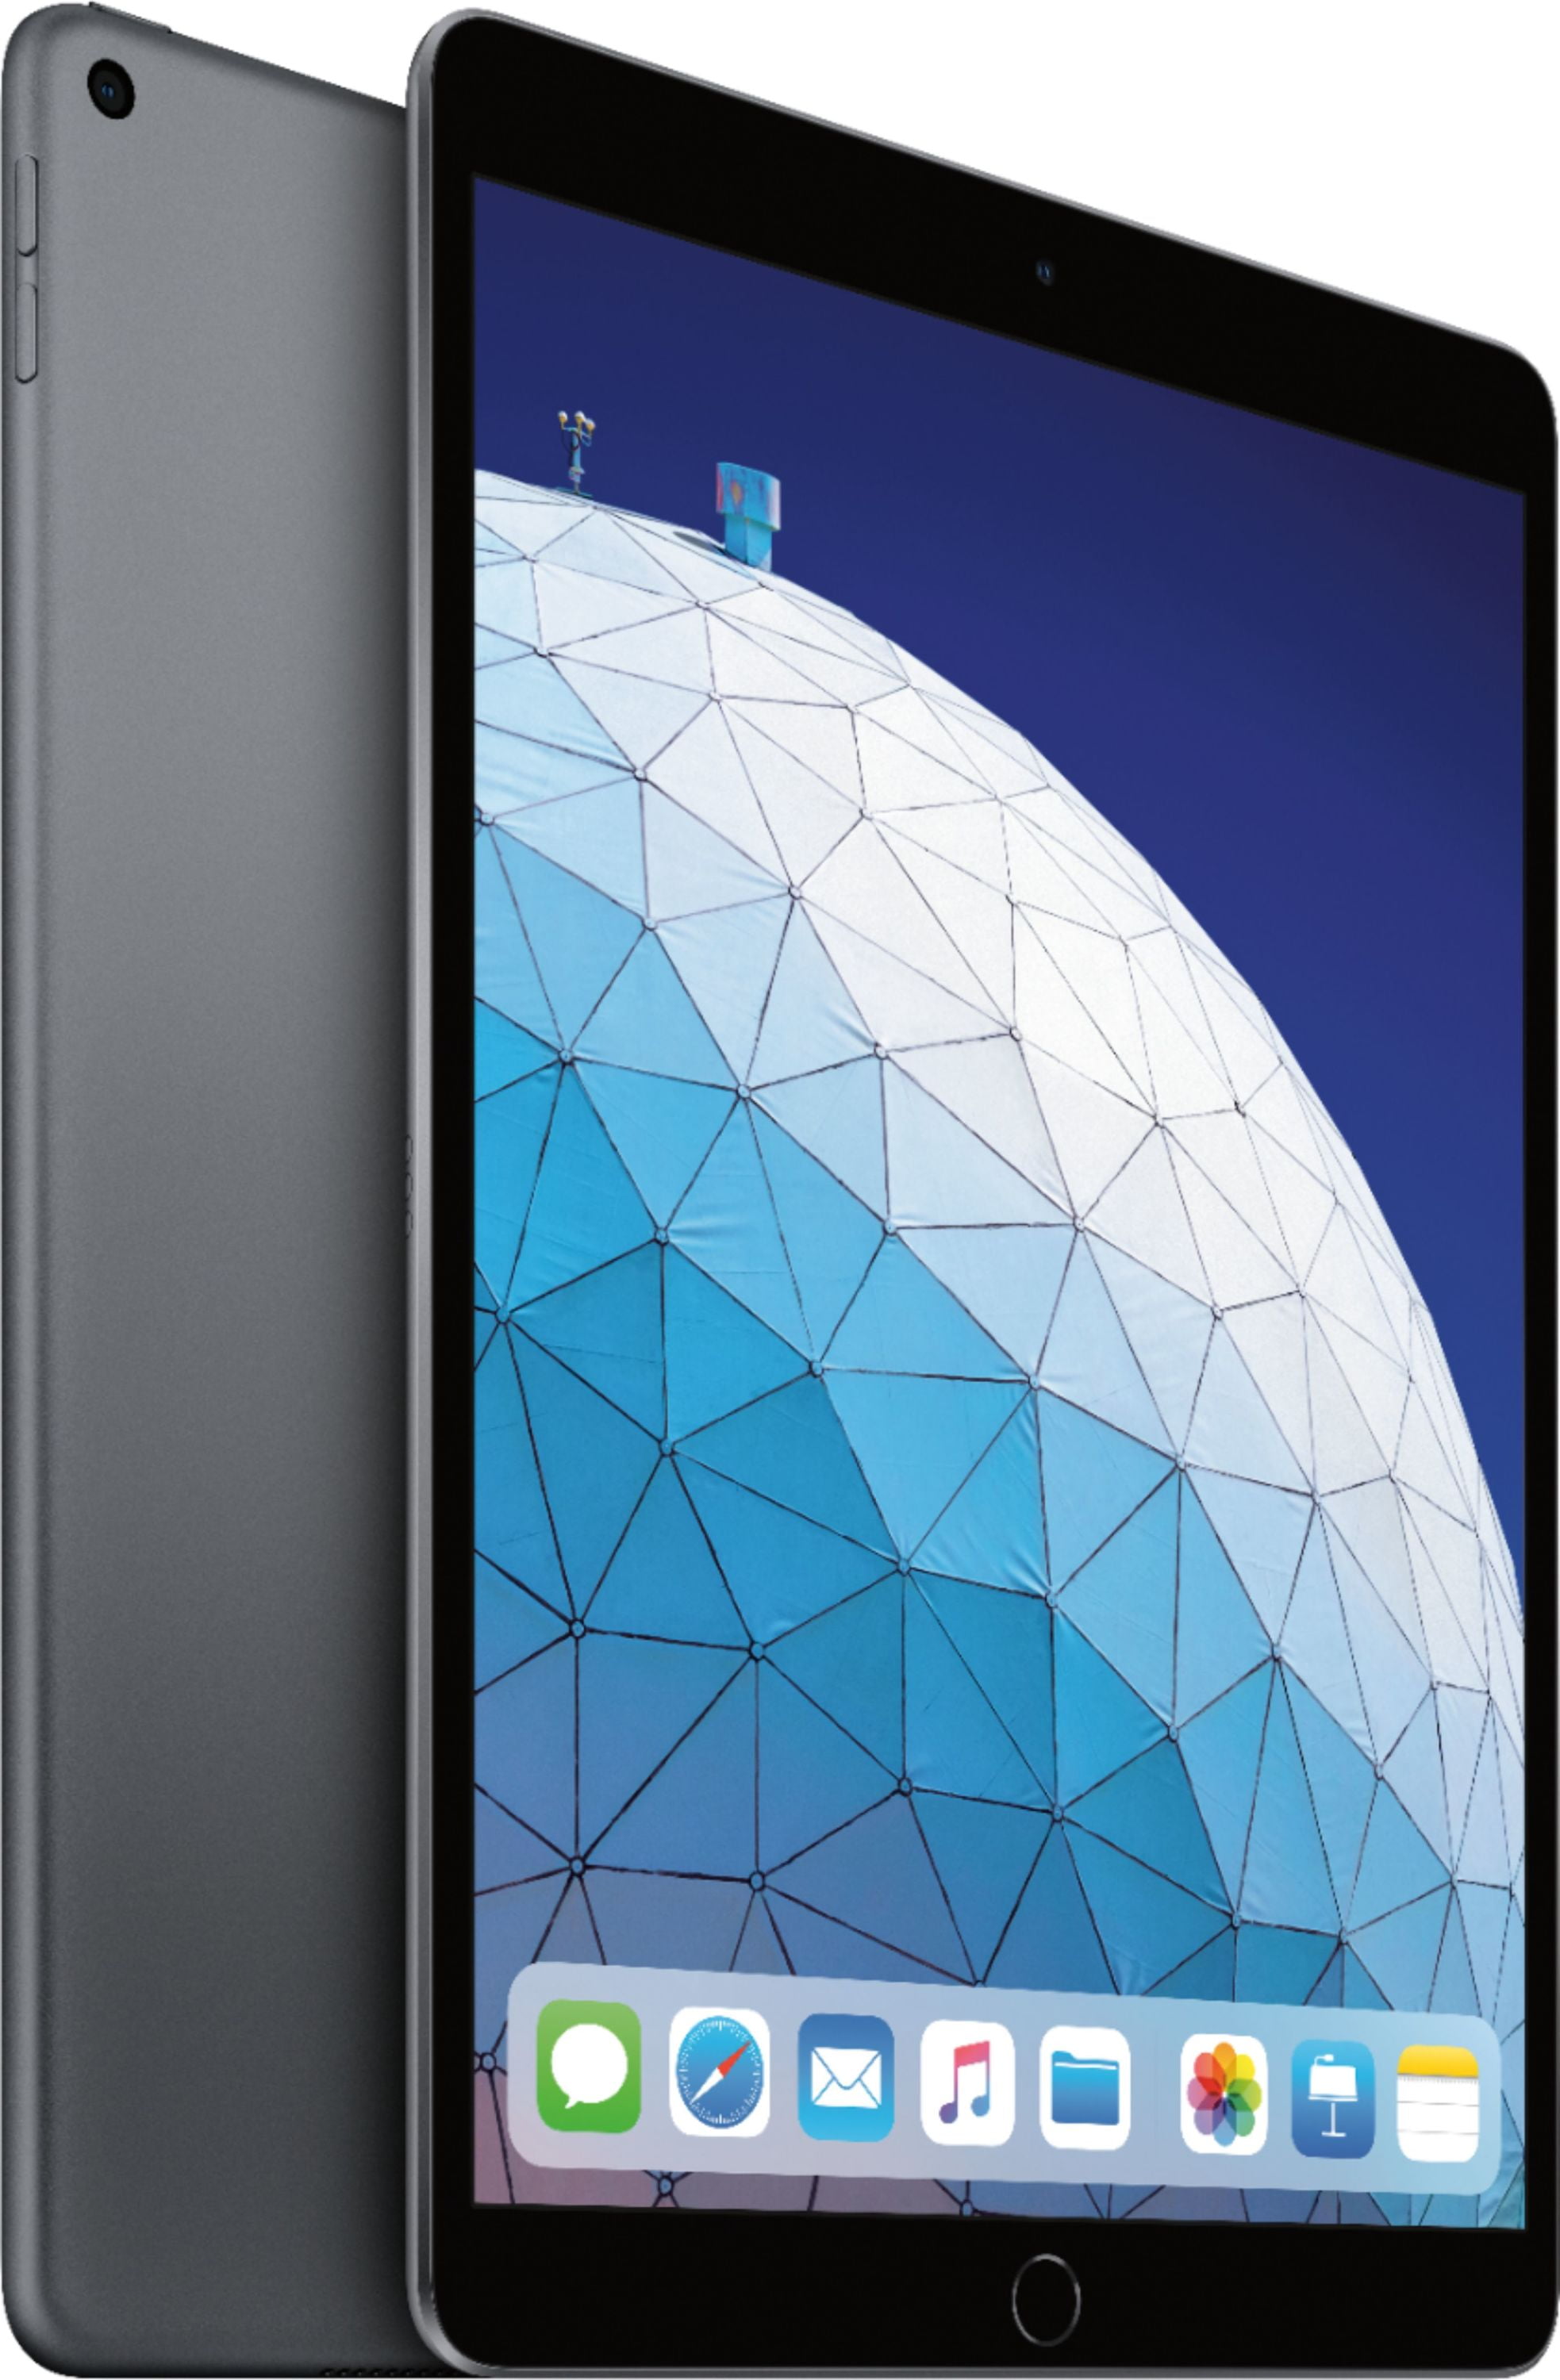 Apple iPad Air 3 64GB Wi-Fi Tablet (MUUJ2LL/A) - Space Gray